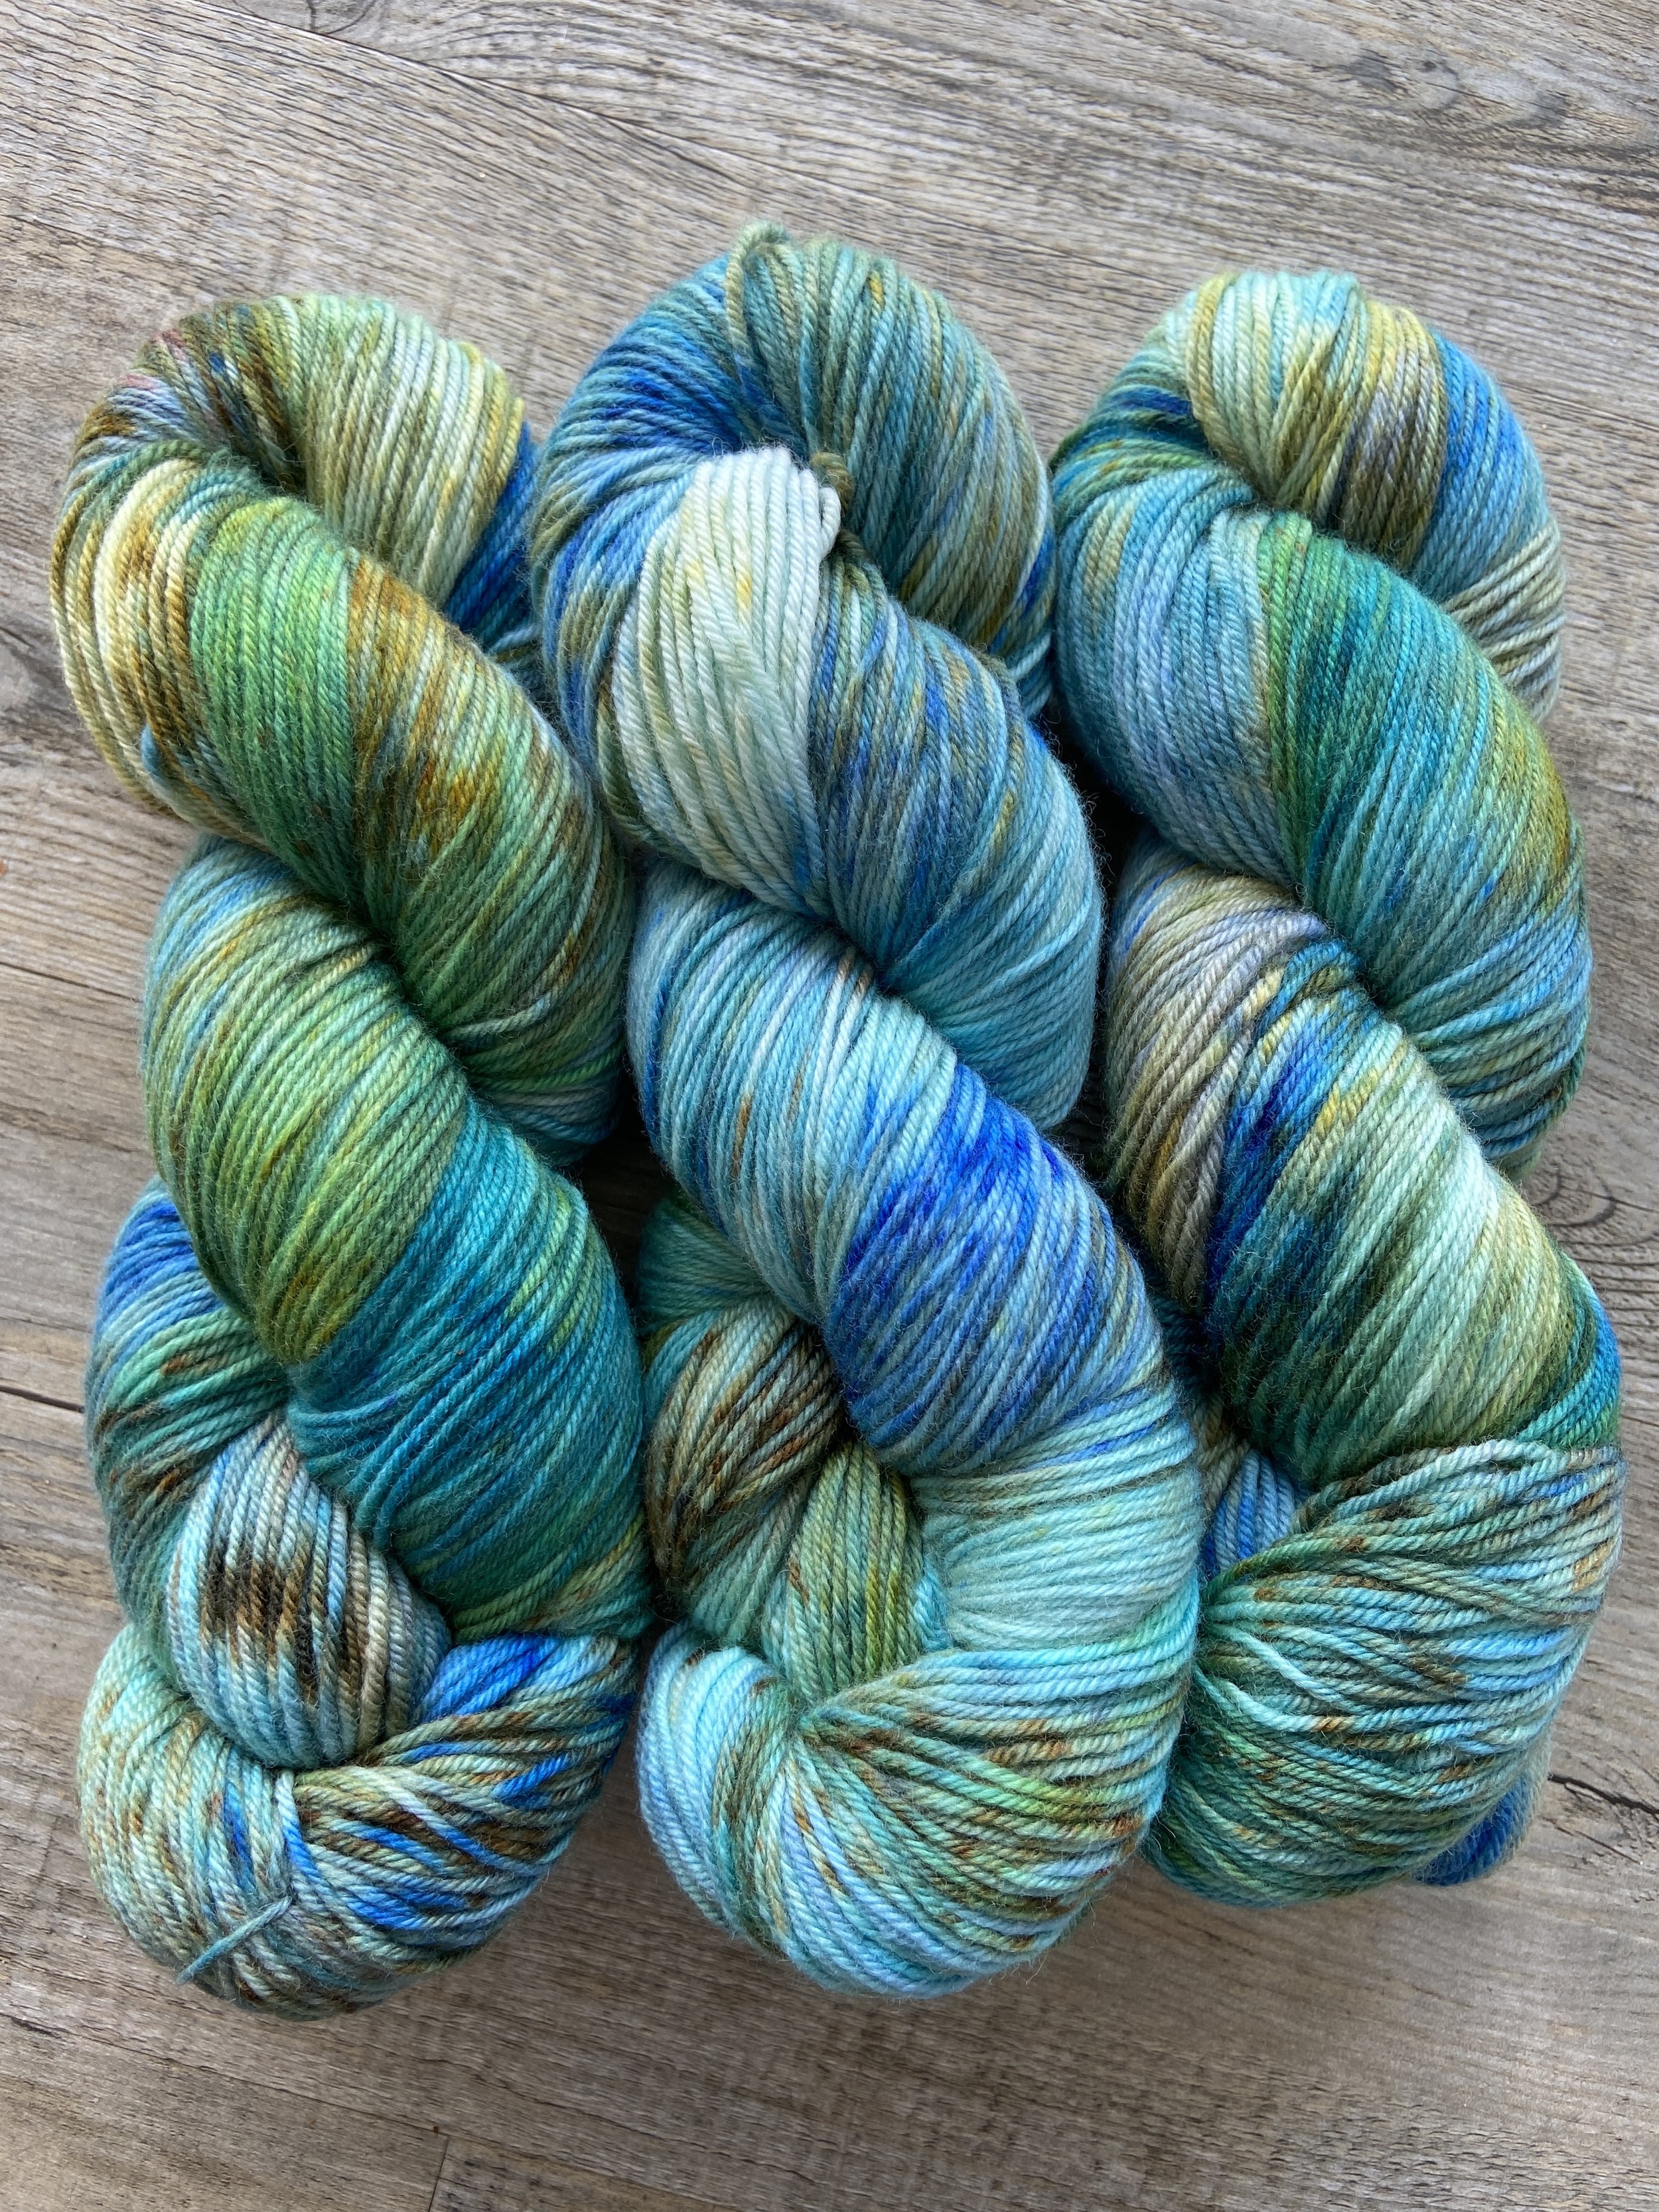 METALLICO Fine Hobbii NIGHT BLUE Yarn, Knitting, Crocheting, 50g, 289 Yds 